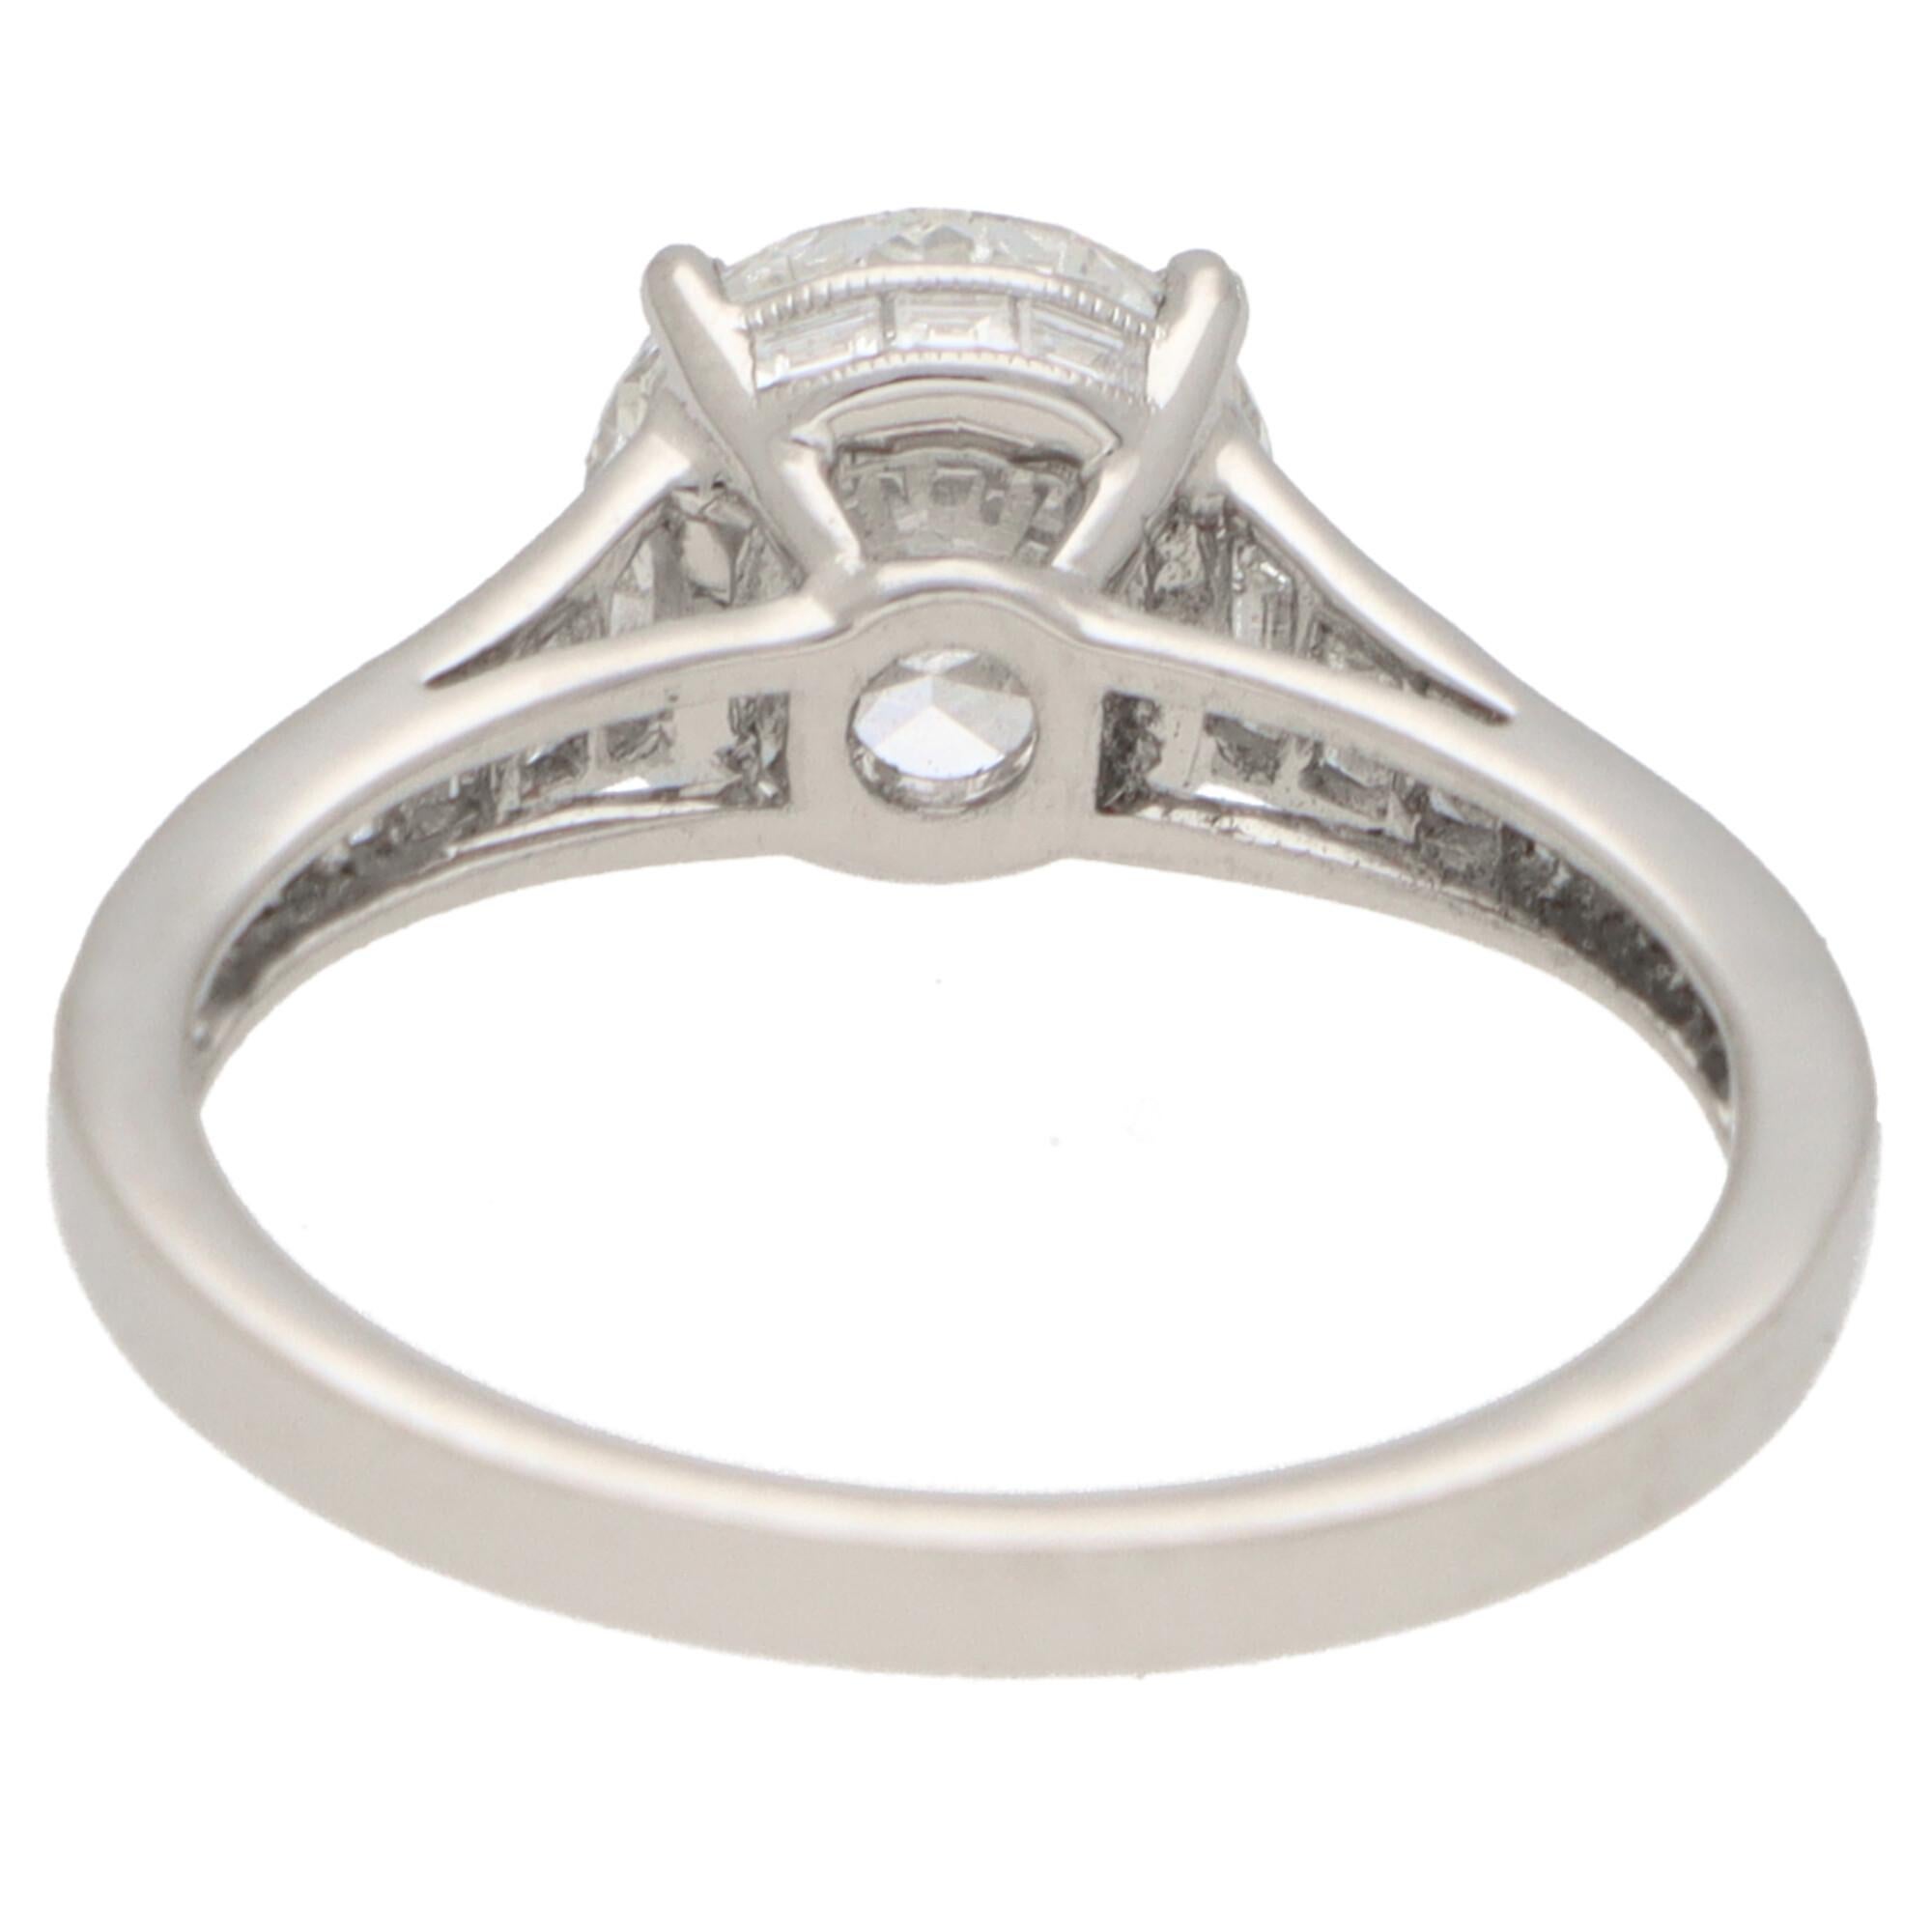 GIA Certified Art Deco Inspired Diamond Engagement Ring Set in Platinum 2